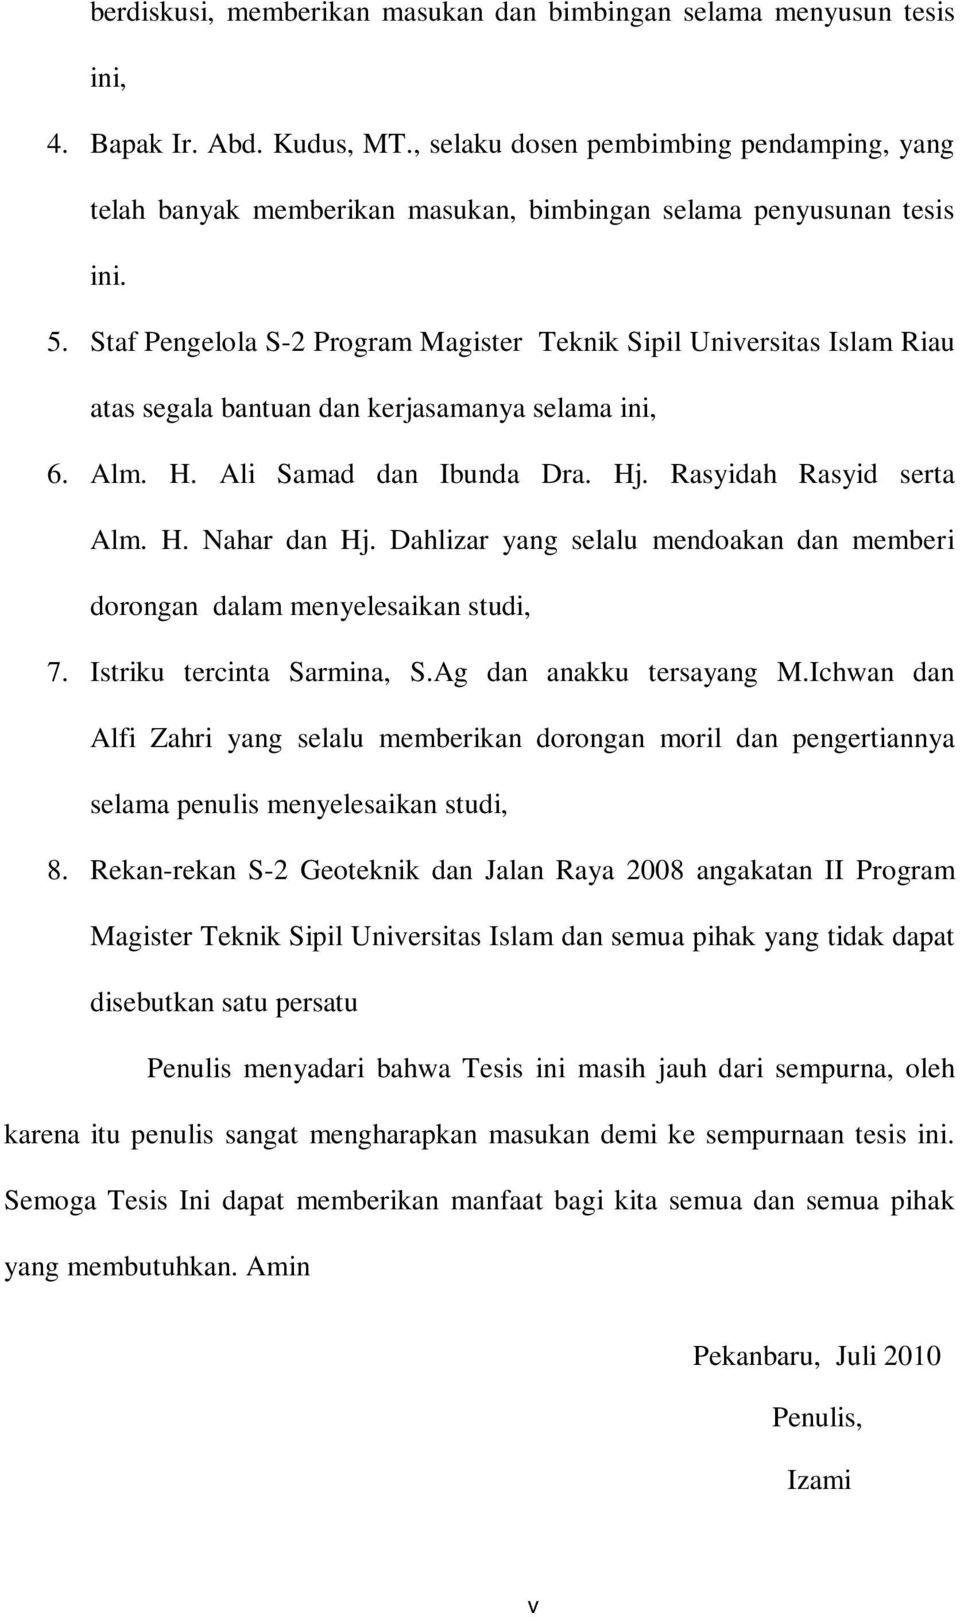 Staf Pengelola S-2 Program Magister Teknik Sipil Universitas Islam Riau atas segala bantuan dan kerjasamanya selama ini, 6. Alm. H. Ali Samad dan Ibunda Dra. Hj. Rasyidah Rasyid serta Alm. H. Nahar dan Hj.